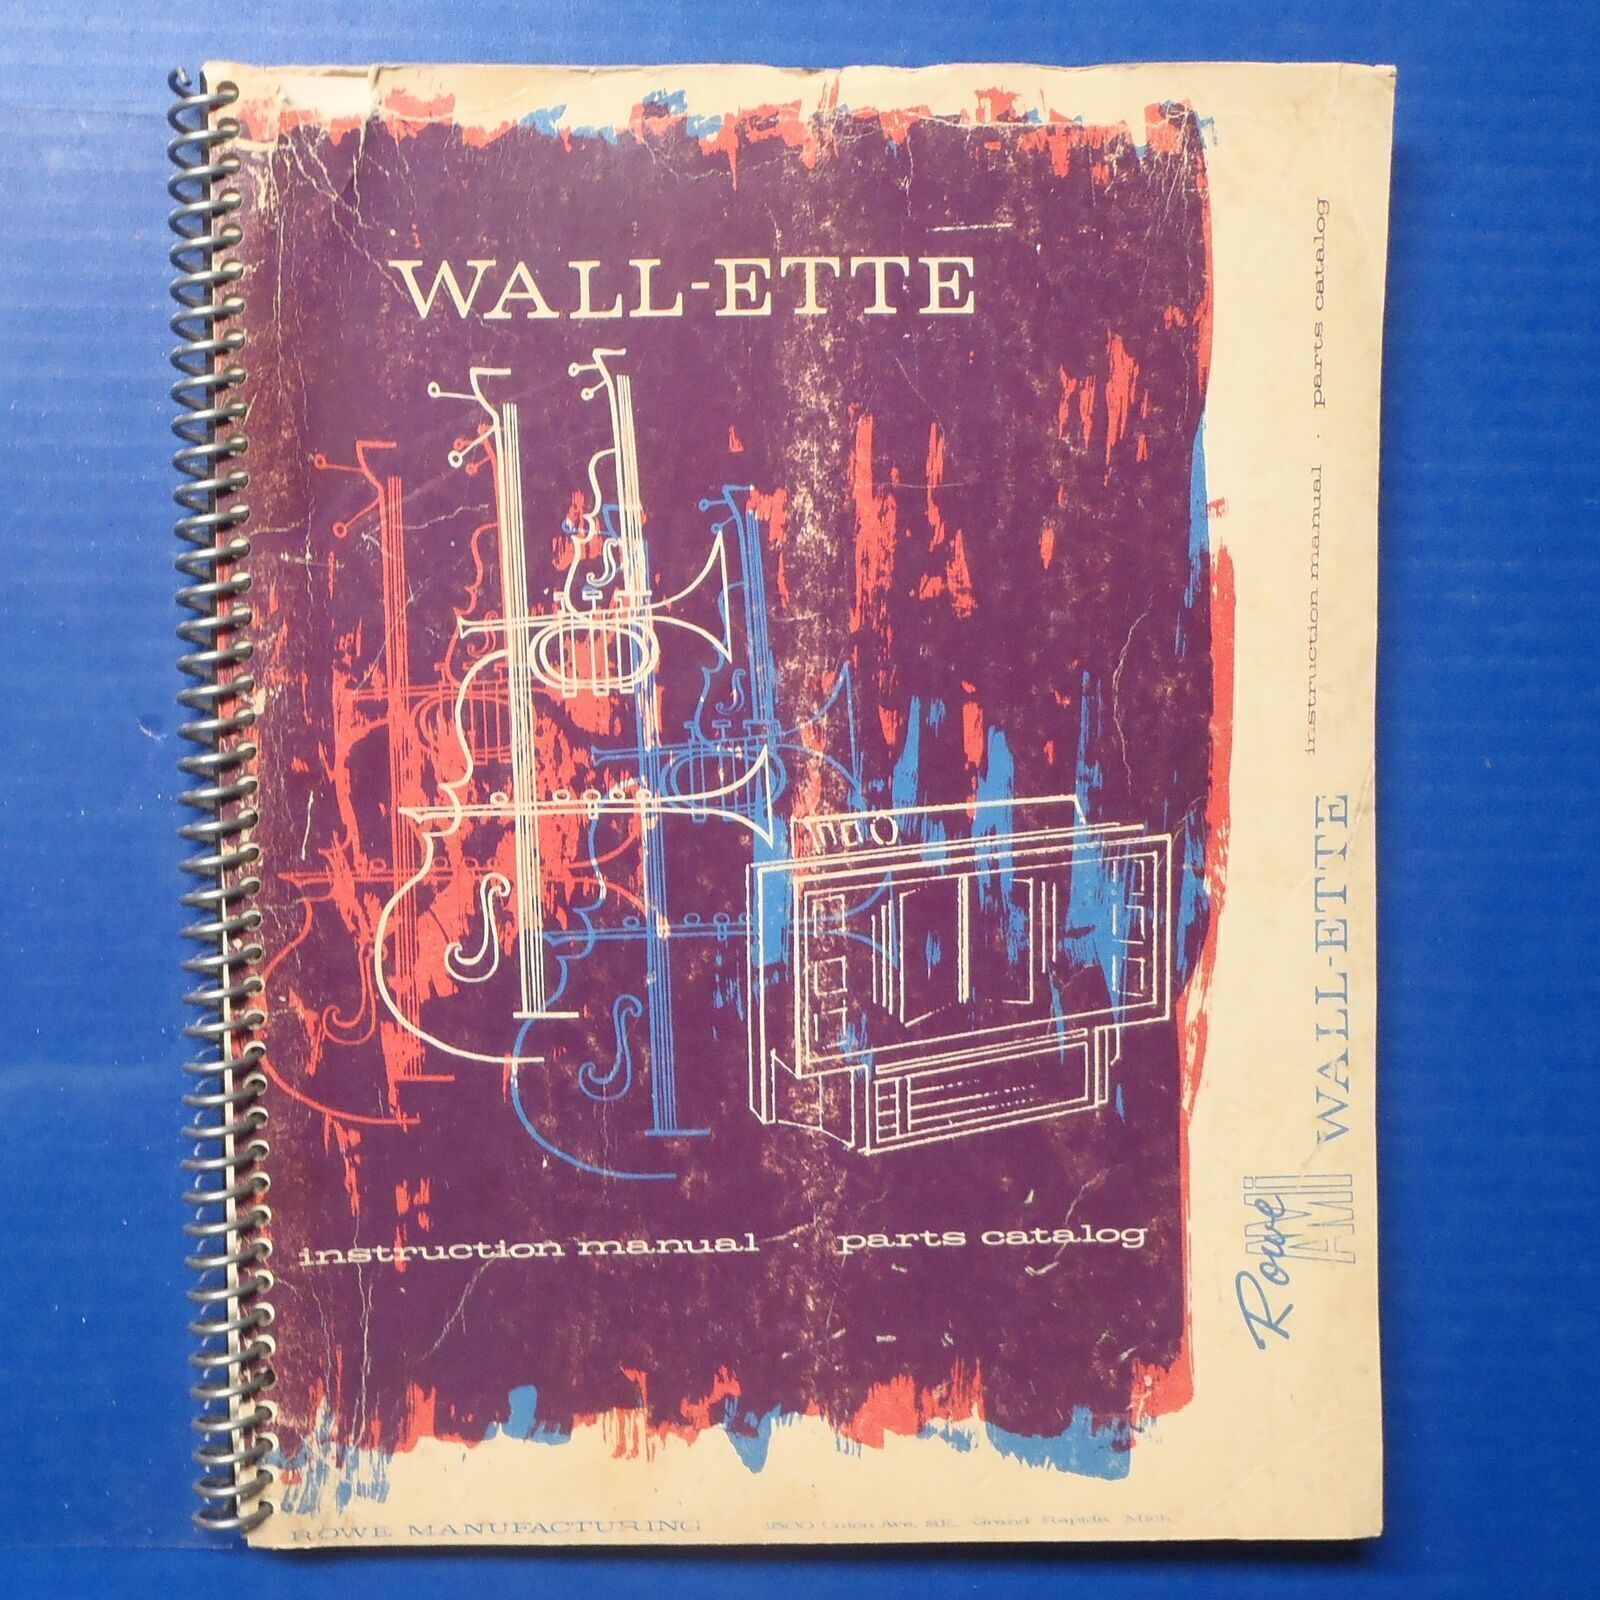 Rowe/AMI WALL-ETTE Wall Console WR Service Manual & Parts Catalog - Original